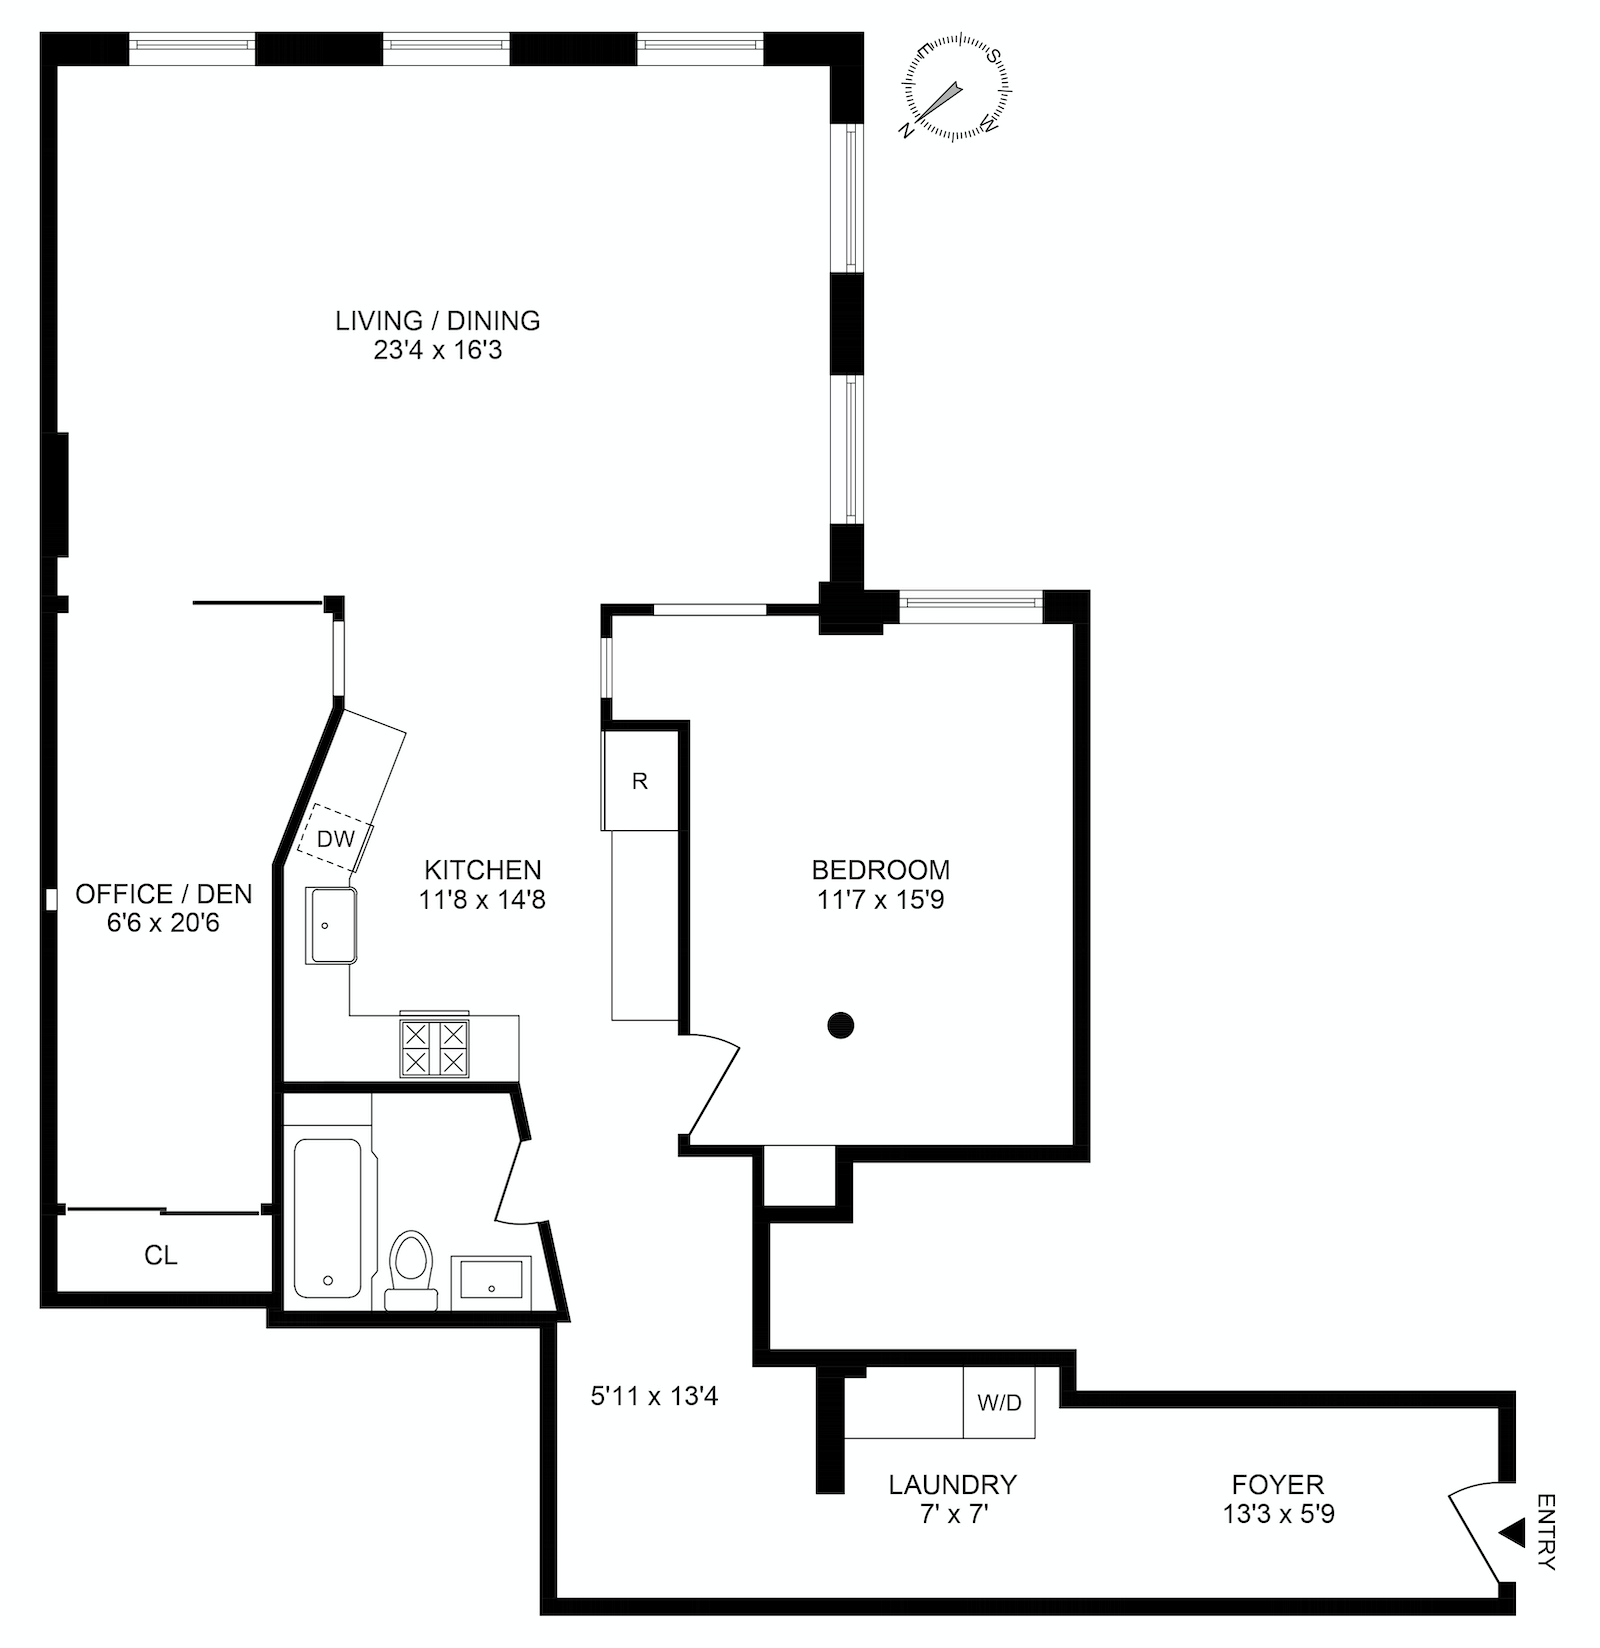 Floorplan for 108 Wooster Street, 4B